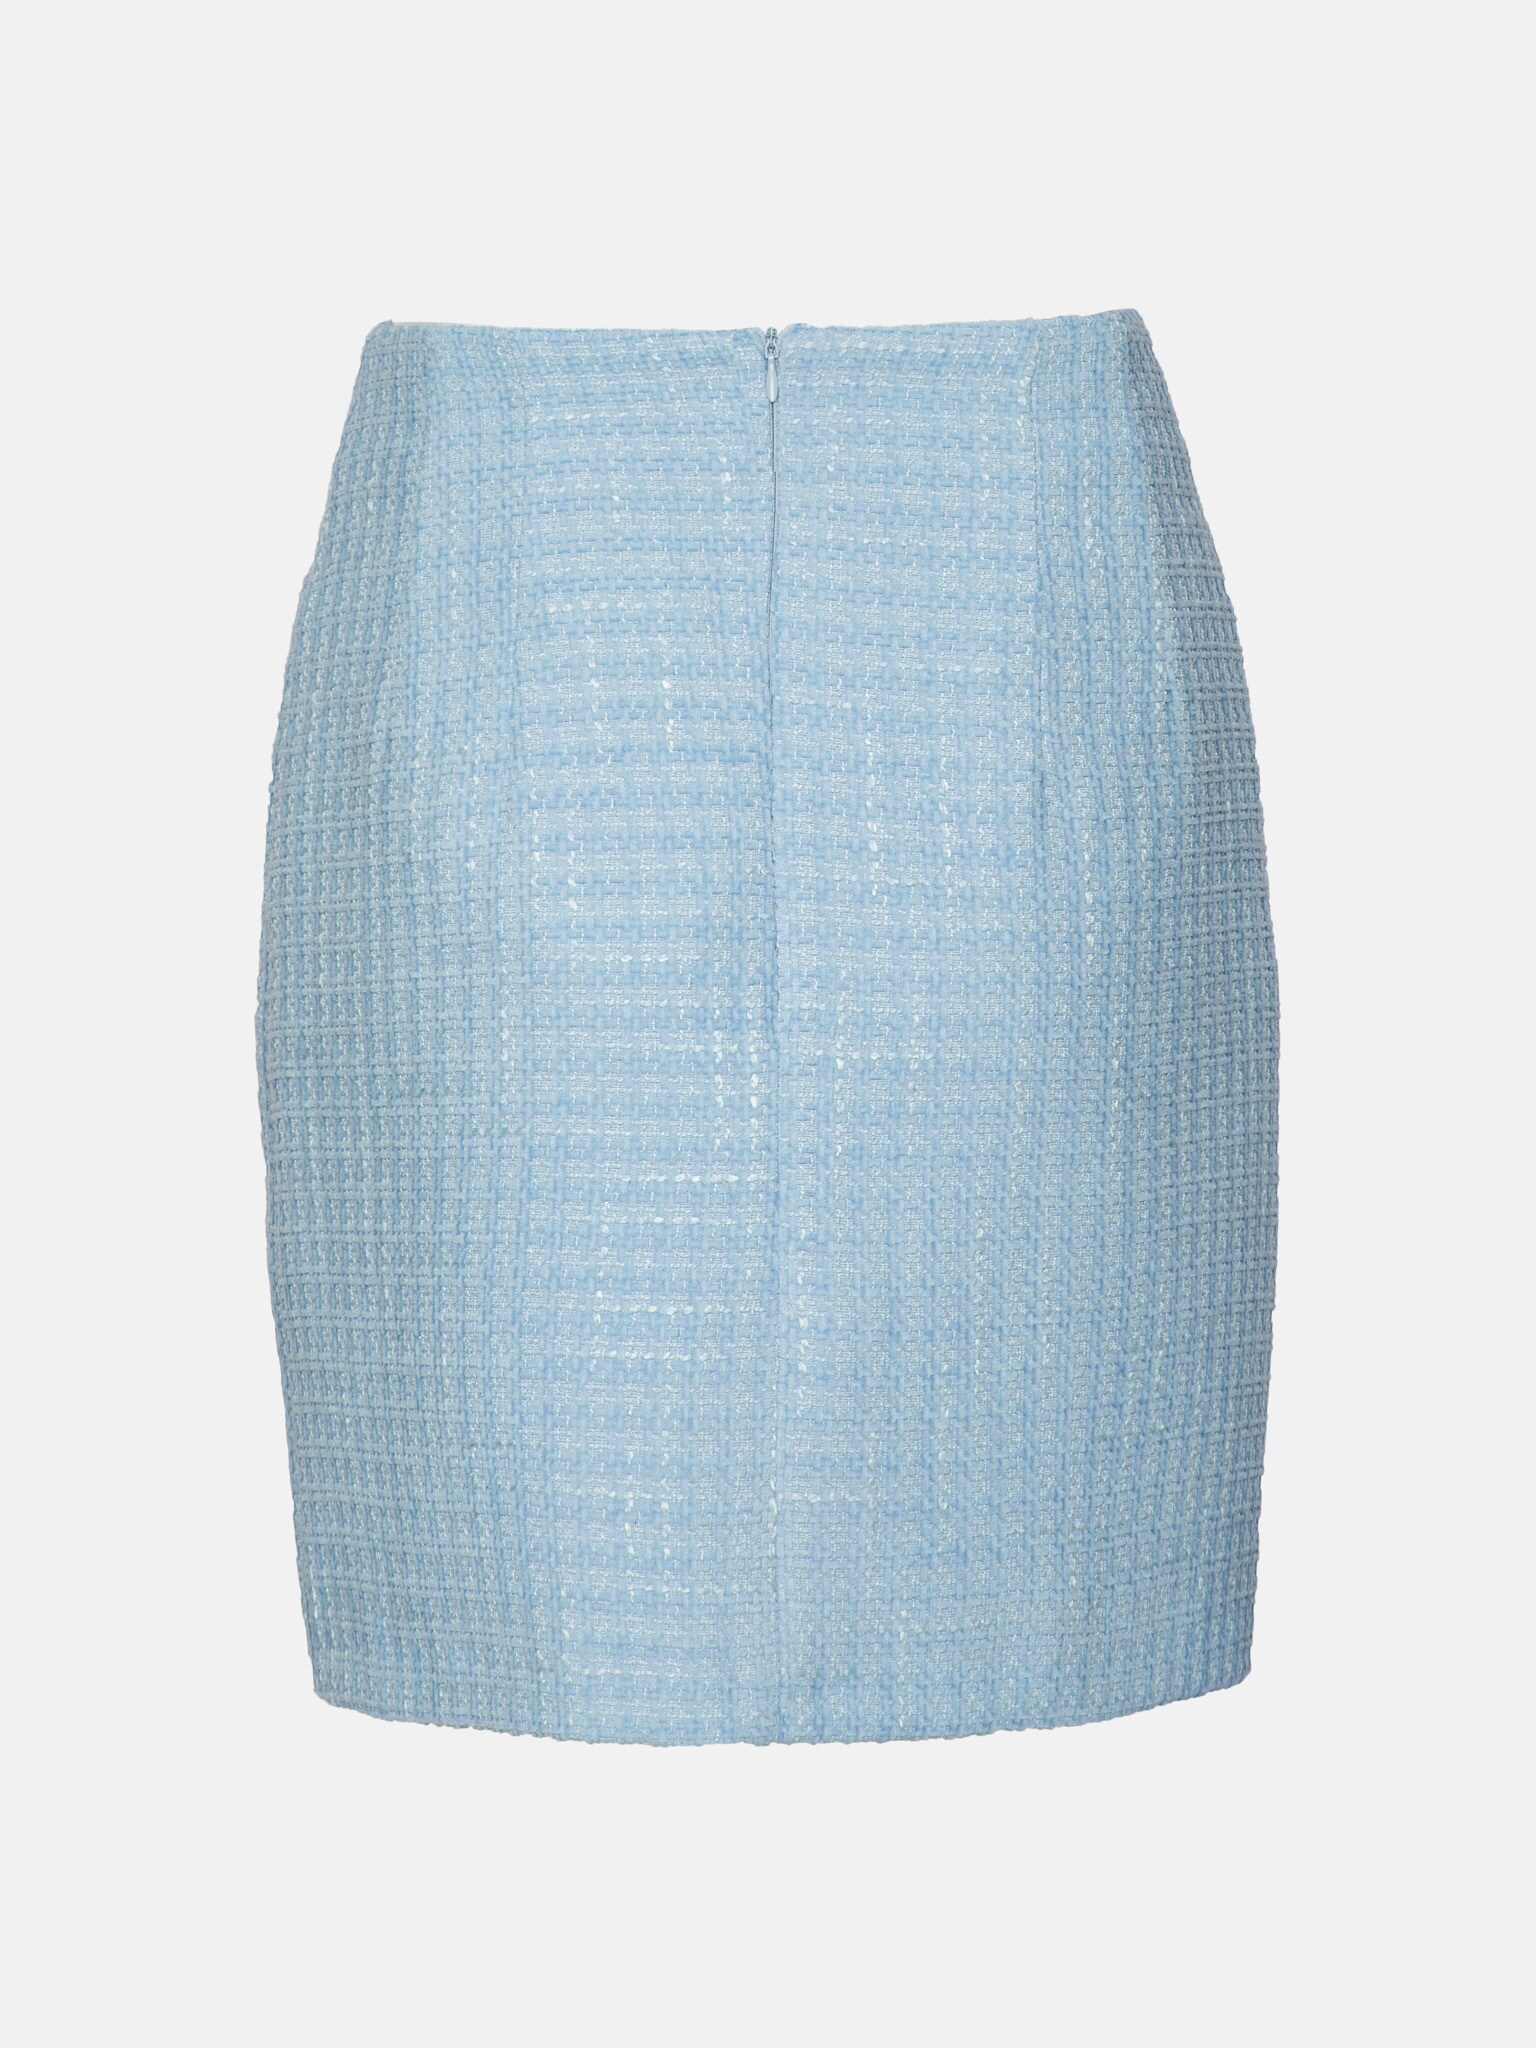 Tweed mini skirt with pockets :: LICHI - Online fashion store